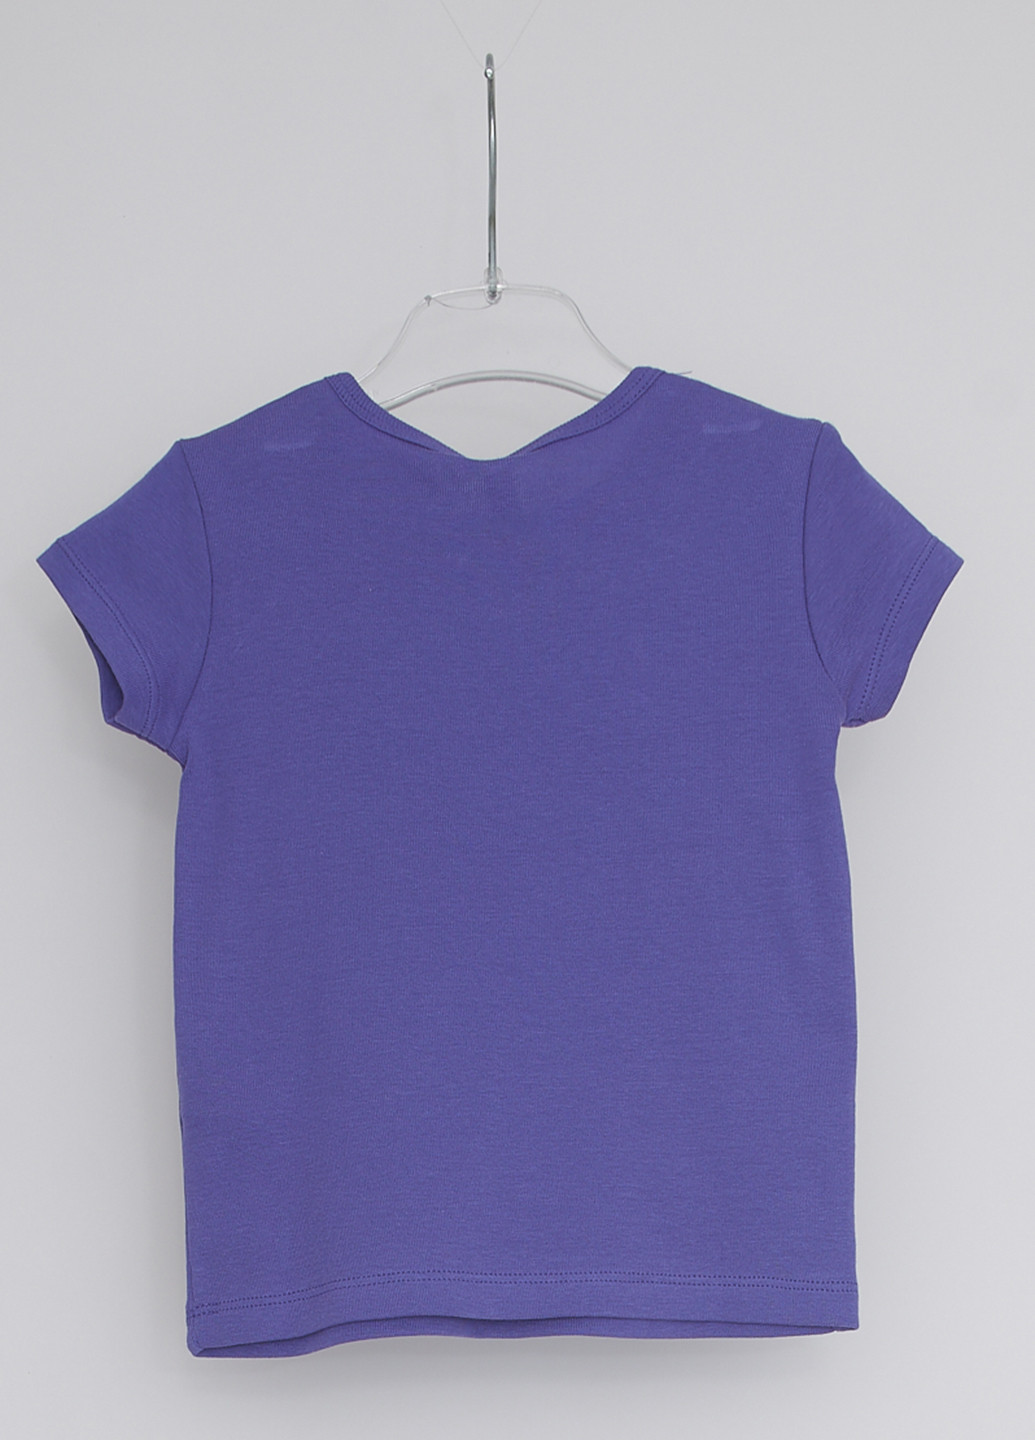 Фиолетовая летняя футболка с коротким рукавом United Colors of Benetton